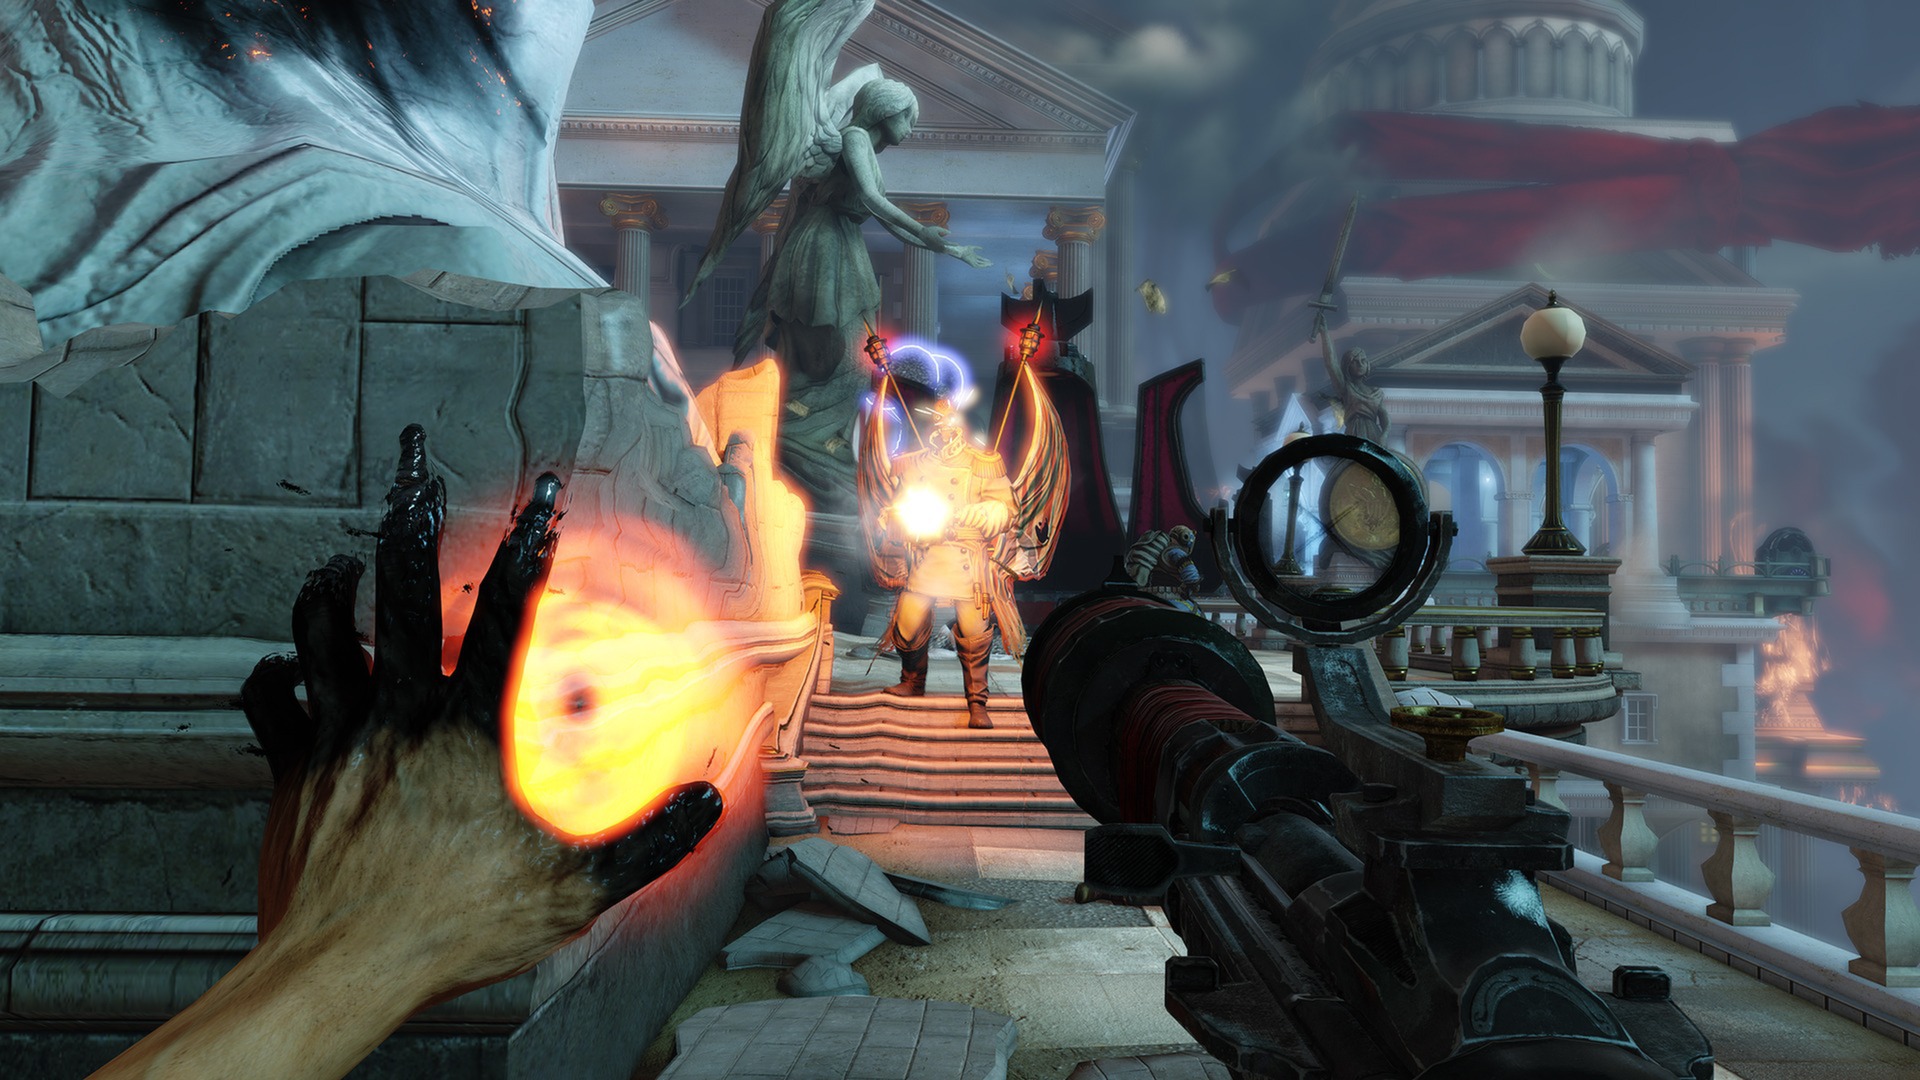 BioShock Infinite (Xbox 360) - Full Game HD Walkthrough - No Commentary 